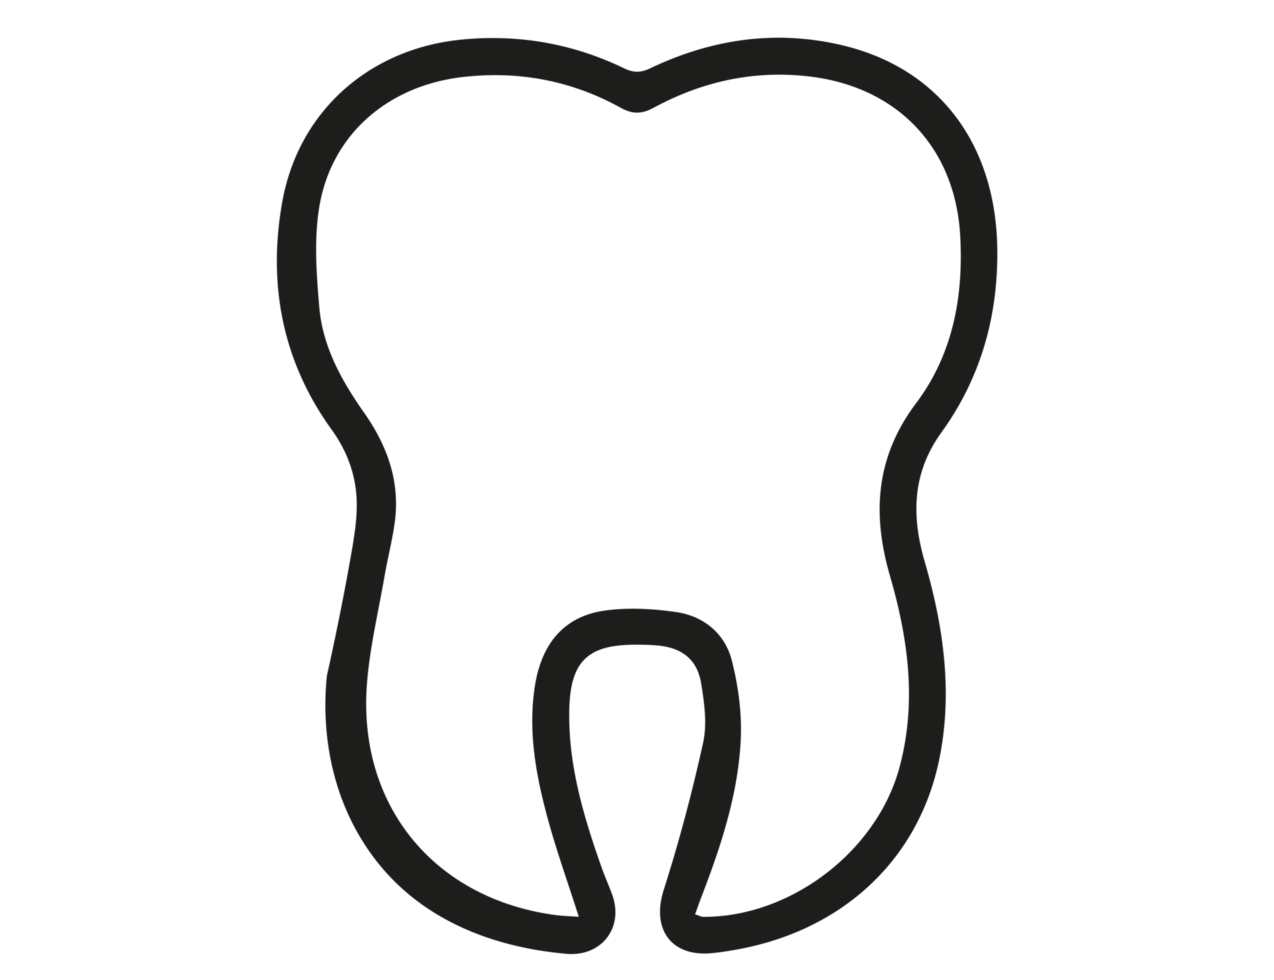 Teeth care symbol on Transparent Background png